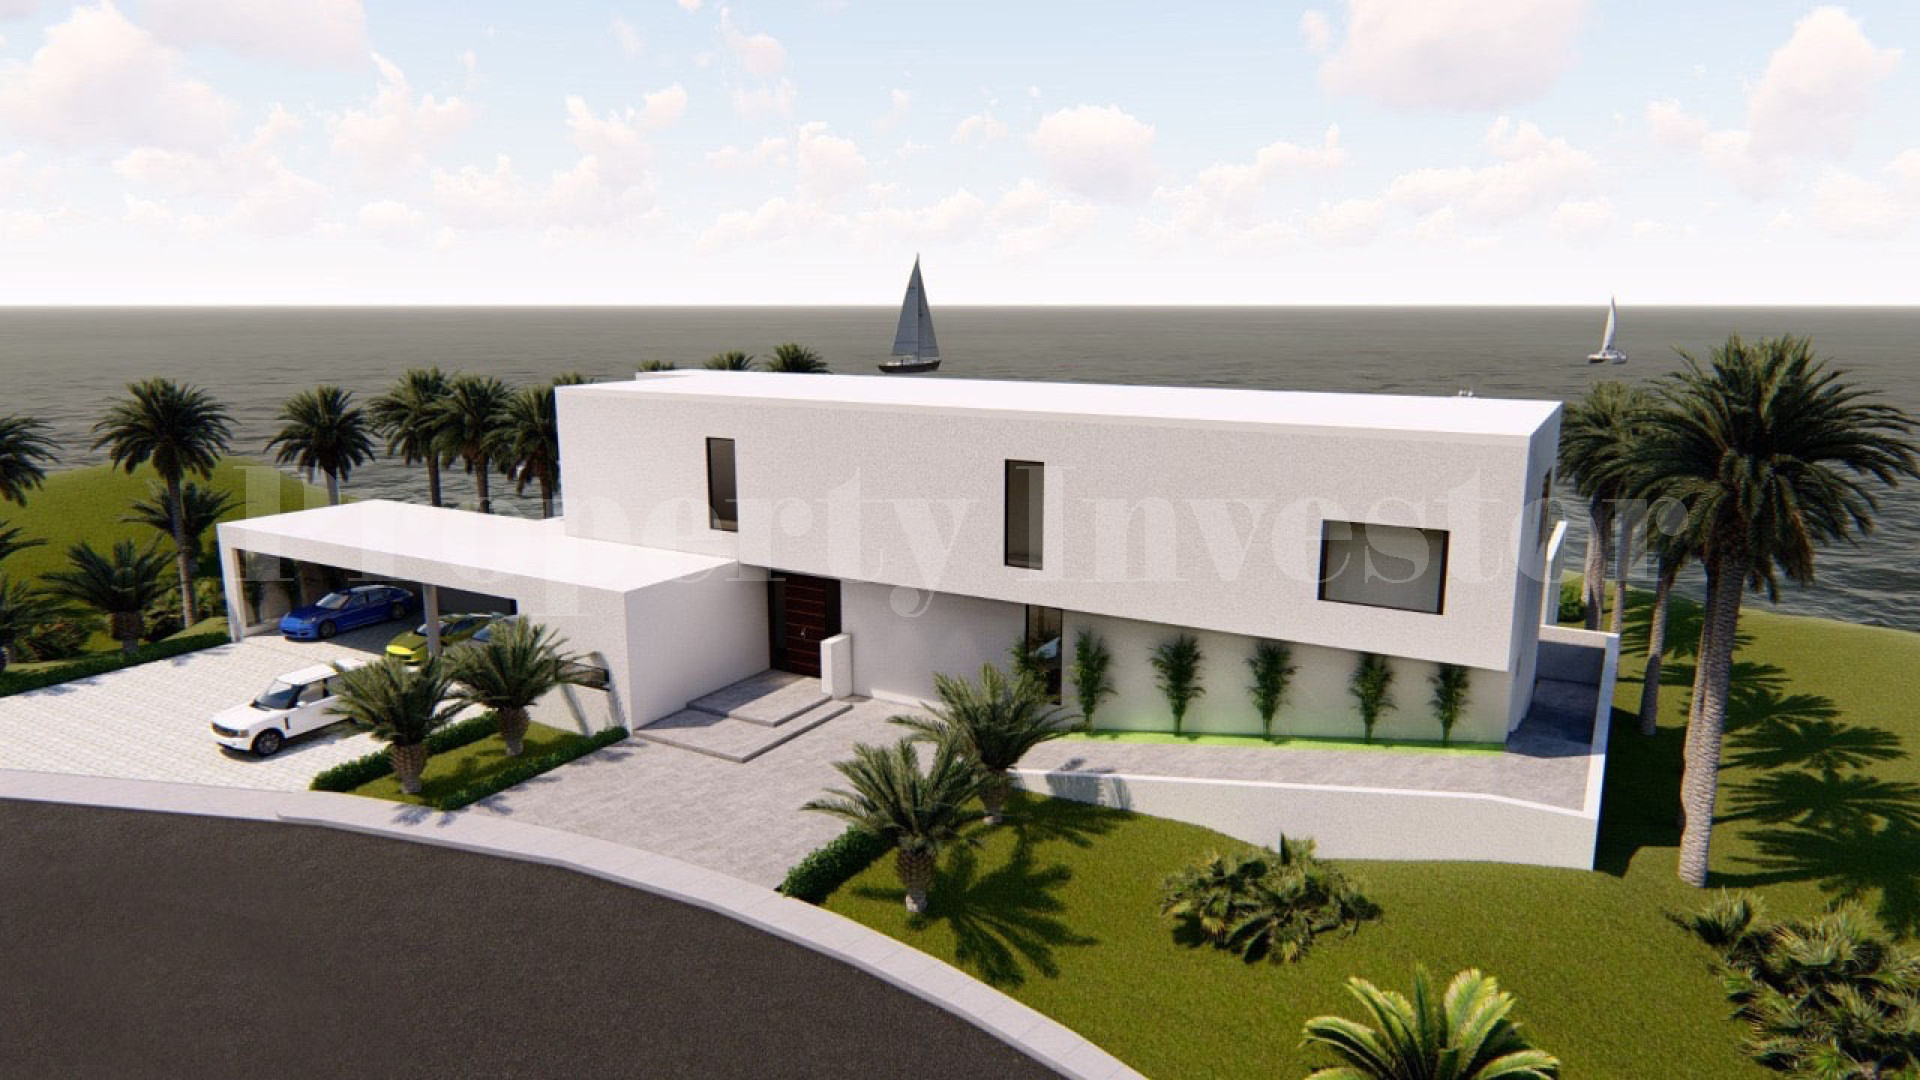 Semi-Complete 4 Bedroom Luxury Oceanfront Villa for Sale in Gated Community of Cap El Limon, Dominican Republic